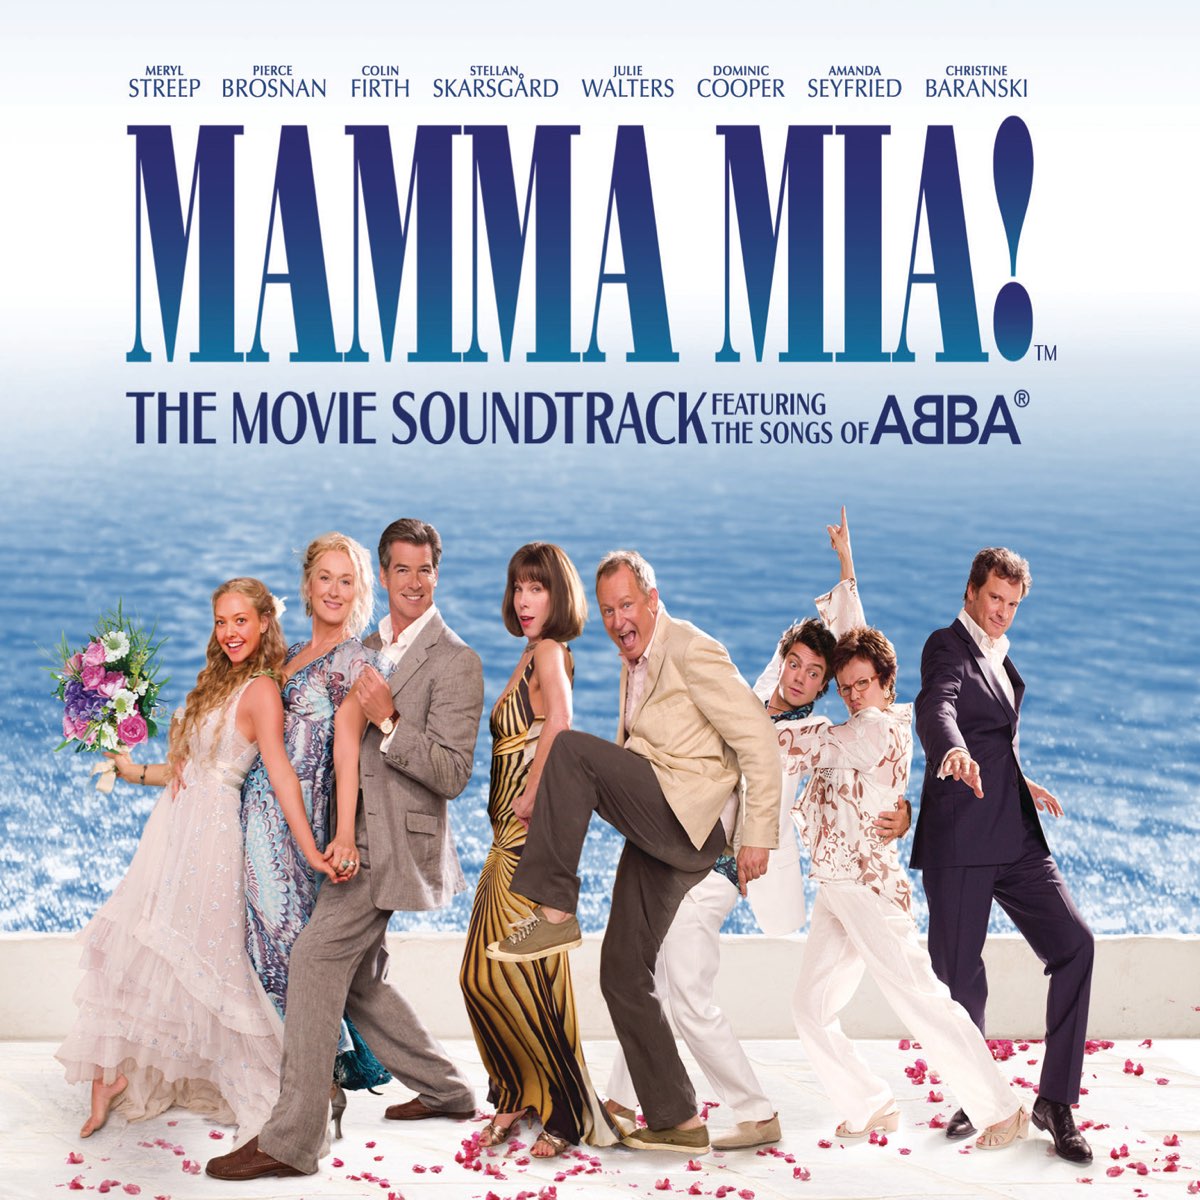 ‎mamma Mia The Movie Soundtrack Feat The Songs Of Abba Bonus Track Version Album By